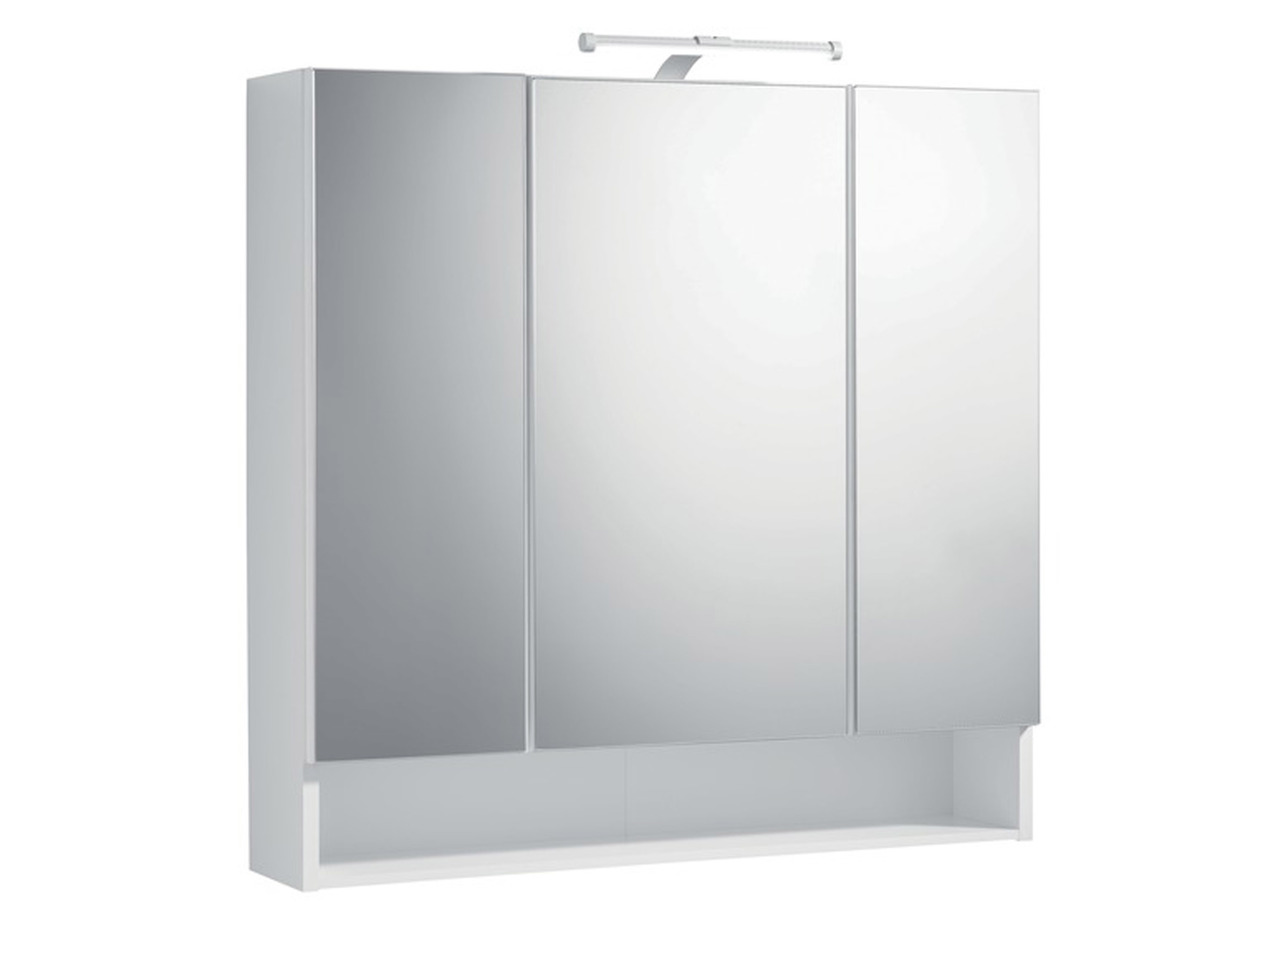 LIVARNO LIVING Mirrored Bathroom Cabinet